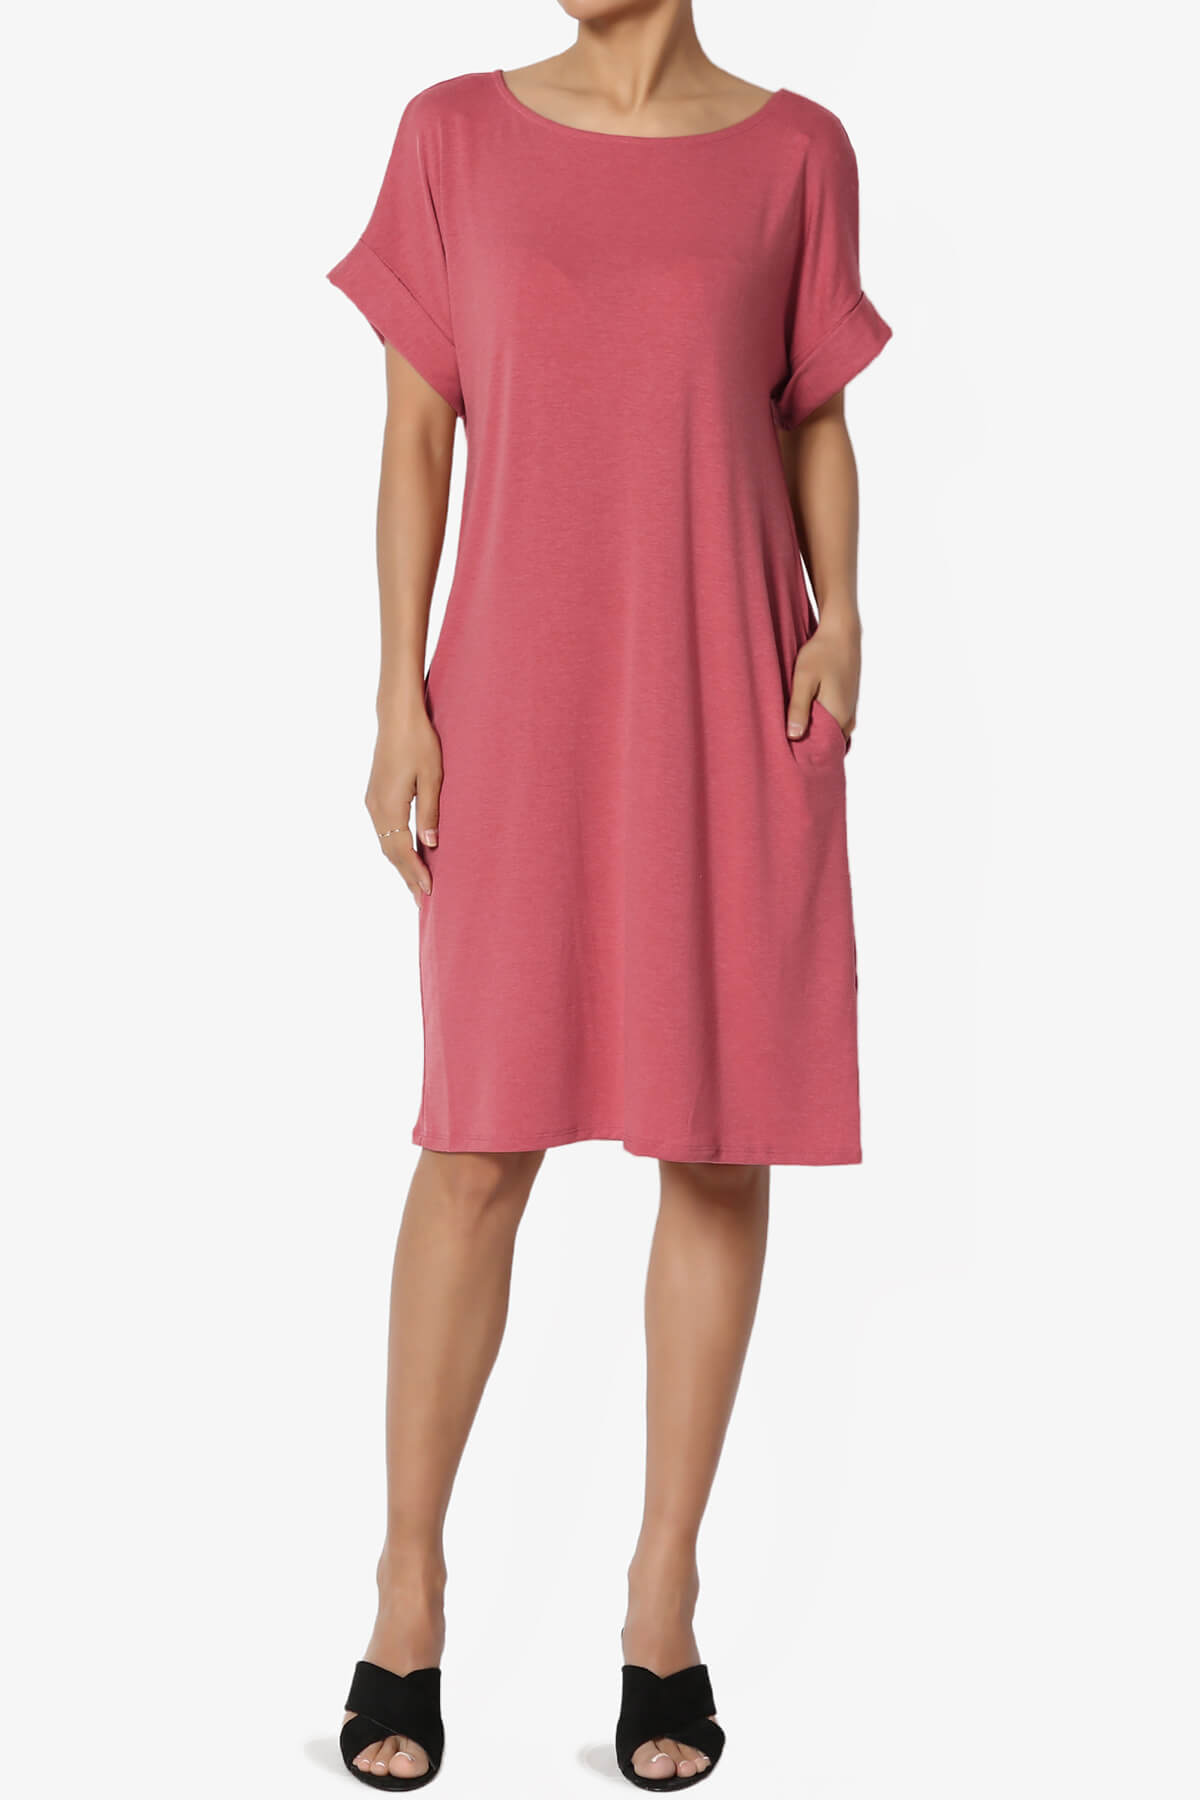 Janie Rolled Short Sleeve Round Neck Dress ROSE_1